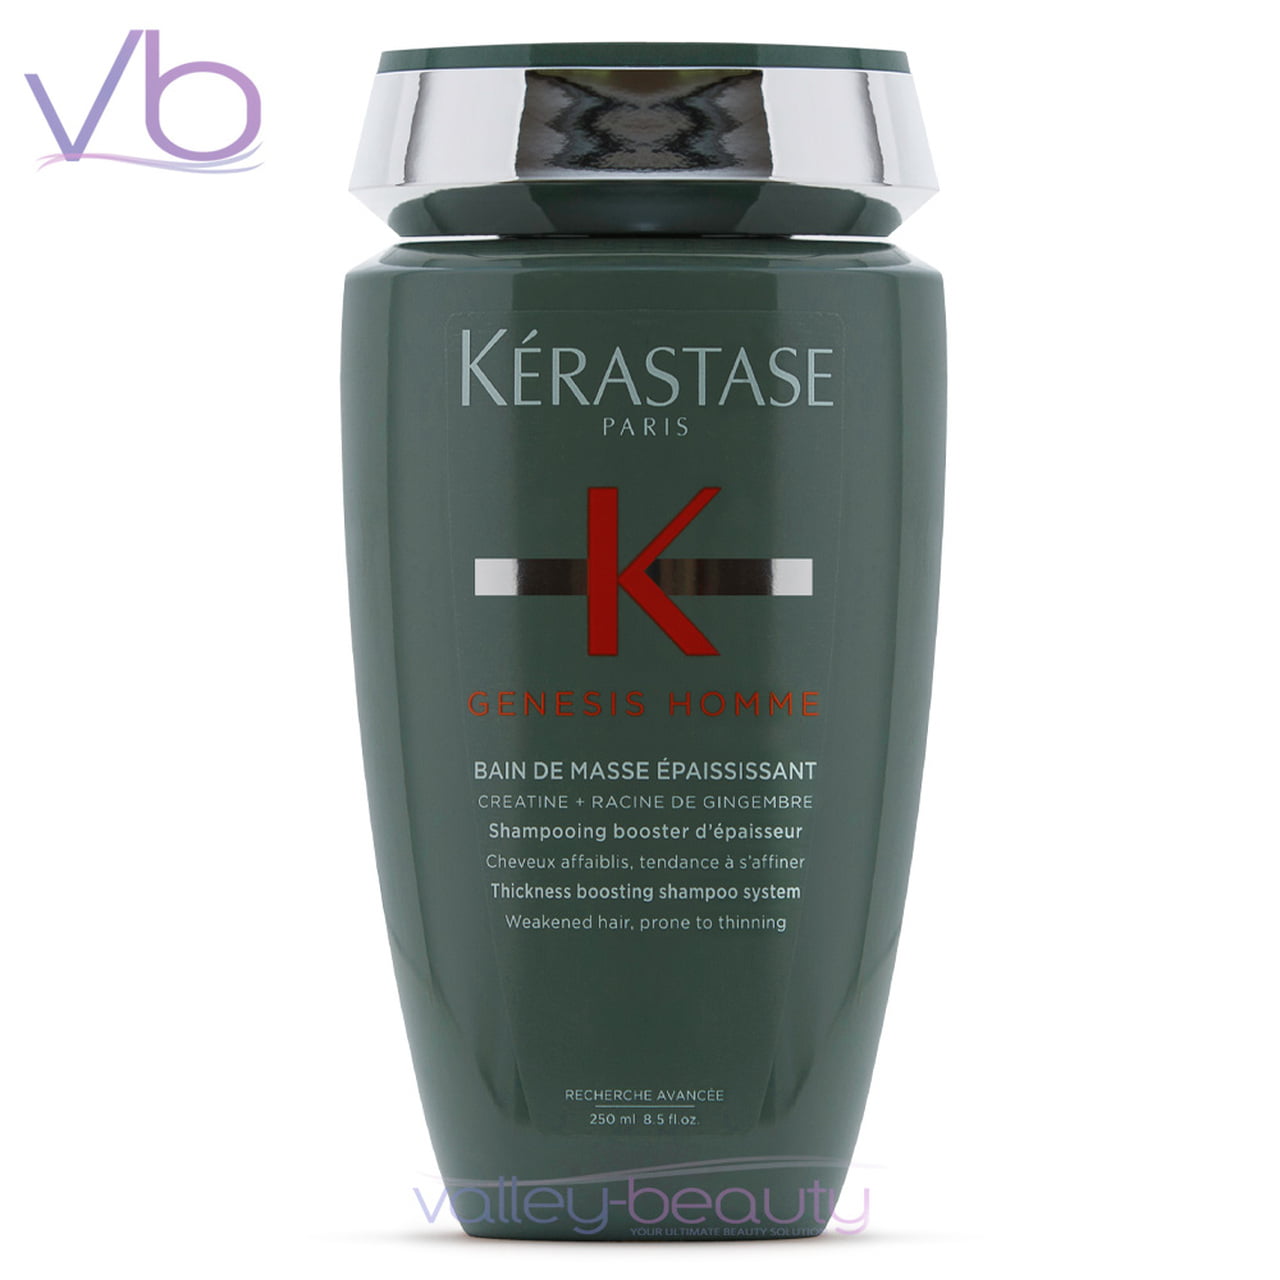 Kerastase Genesis Homme Bain De Masse |Thickening Boosting Shampoo for 250ml - Walmart.com